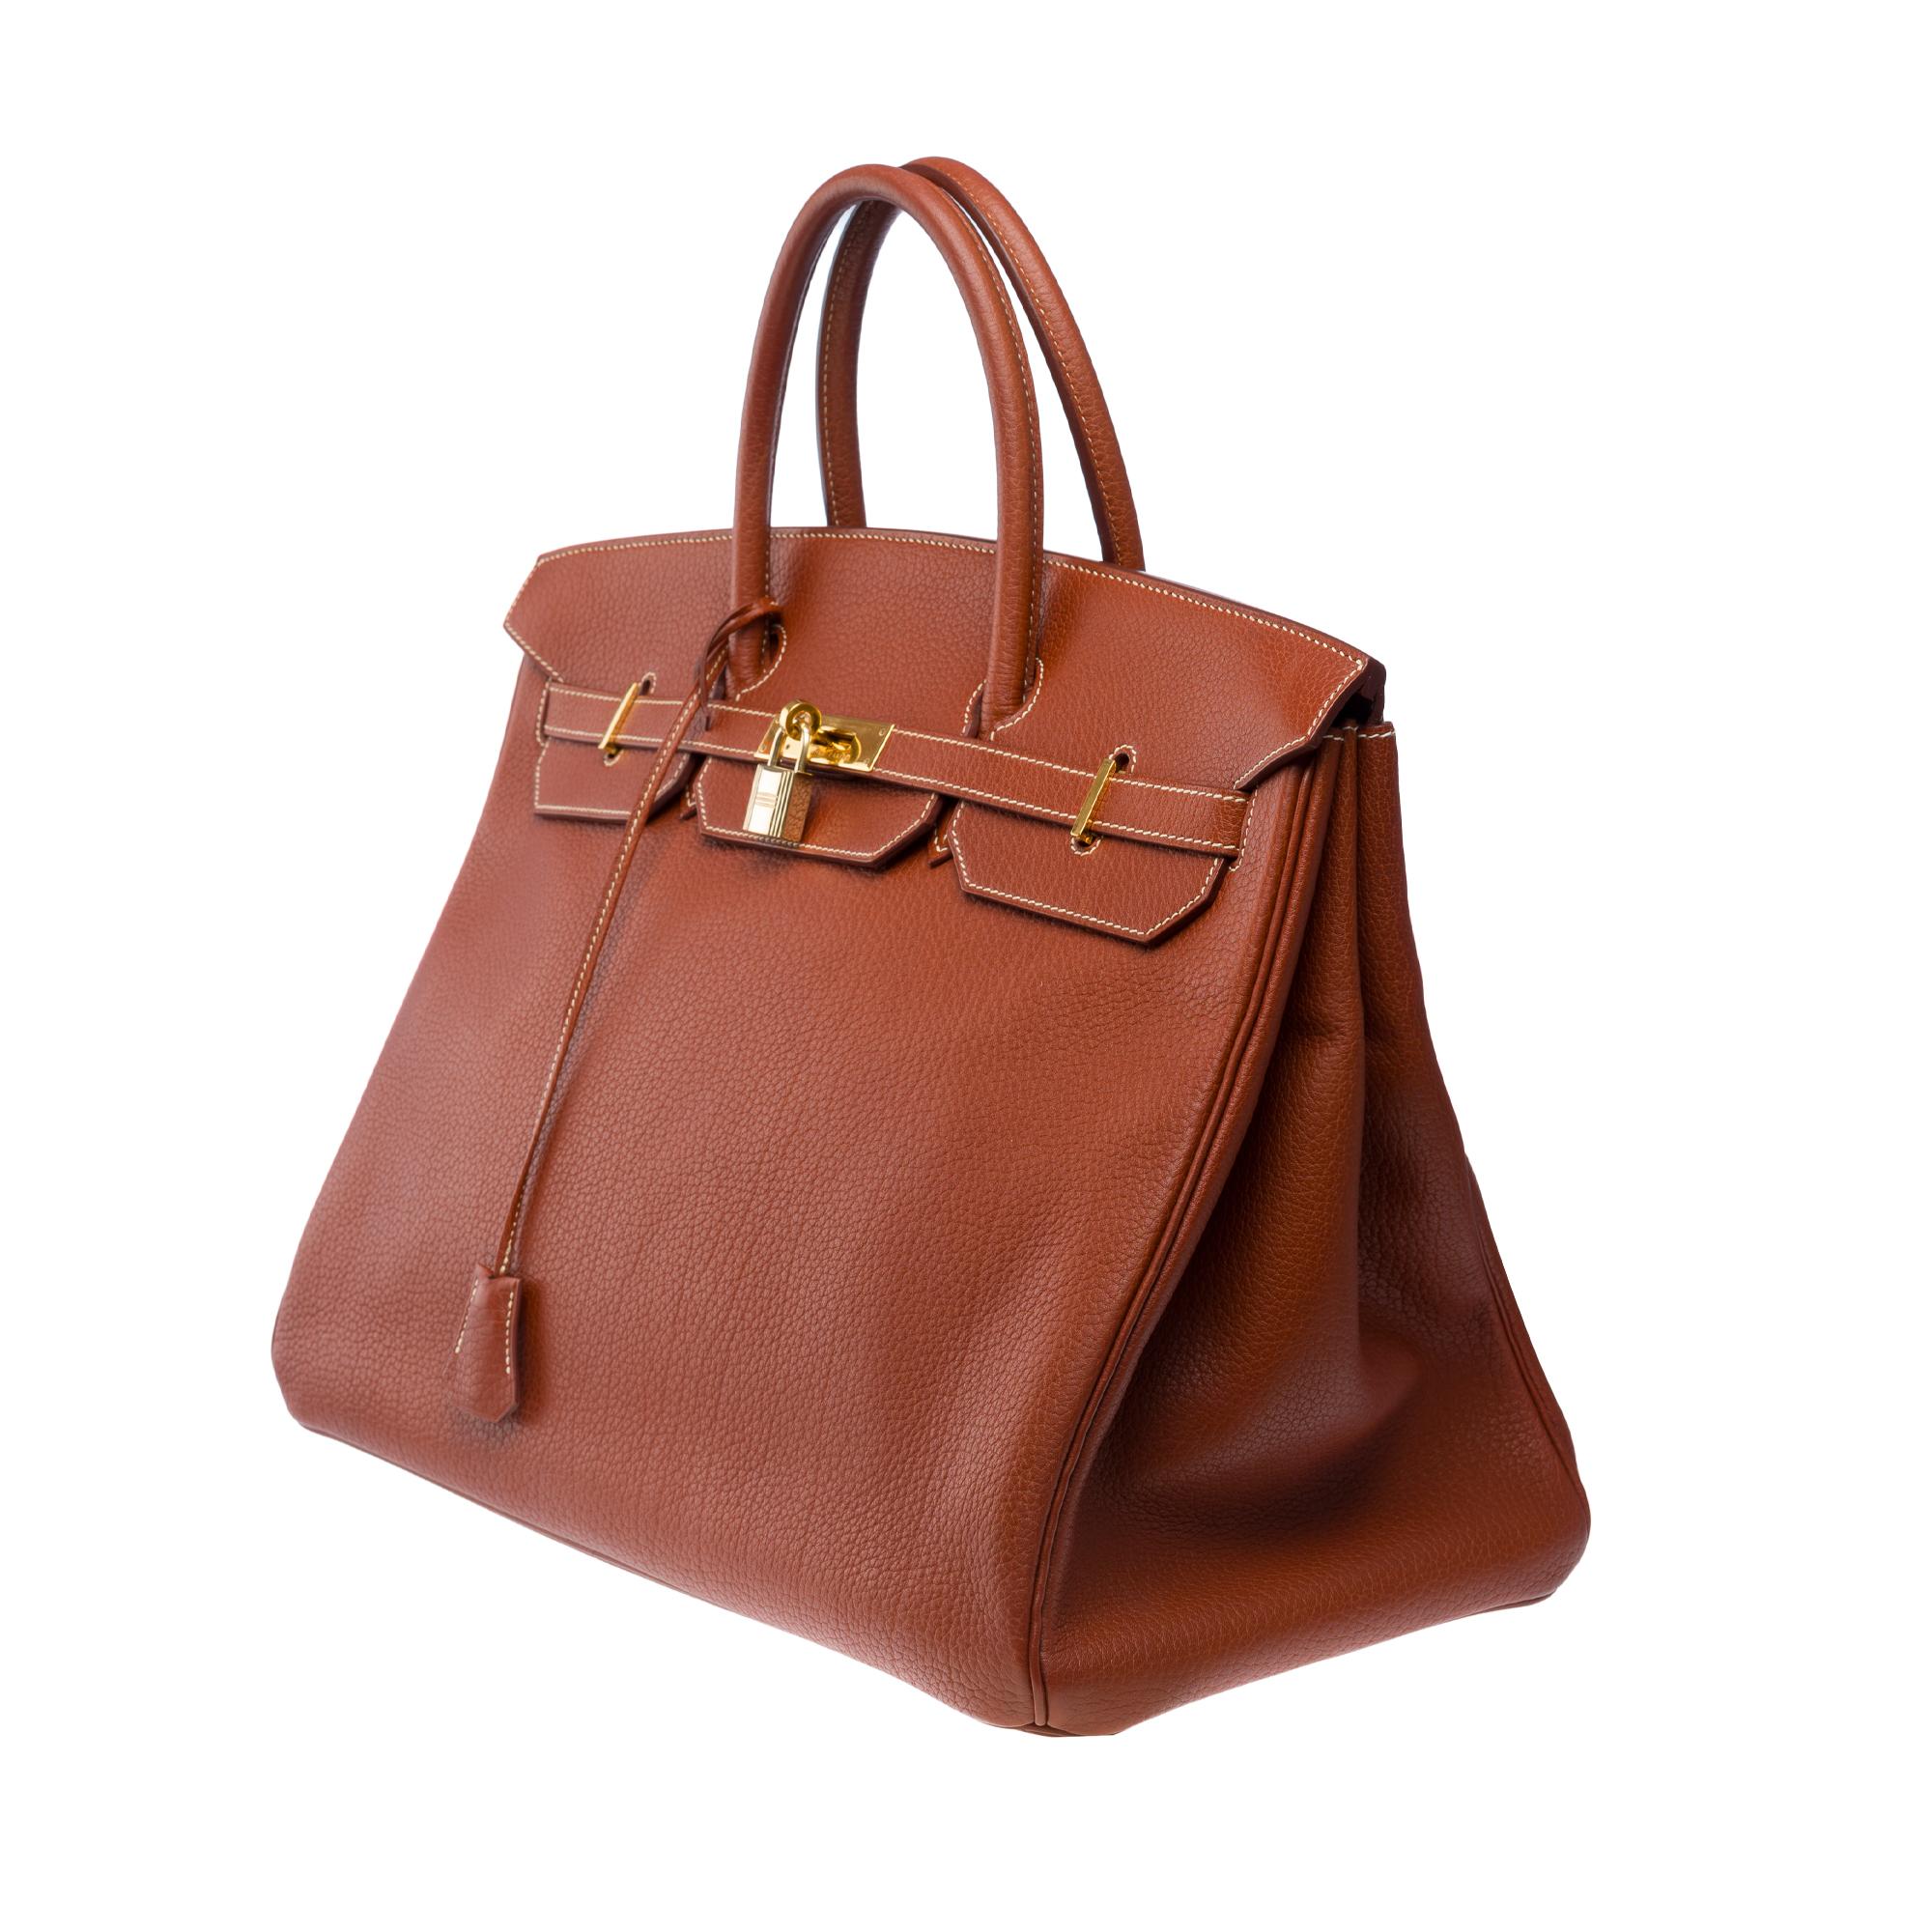 Classy & Rare Hermes Birkin 40 handbag in Brick Fjord leather, GHW 1